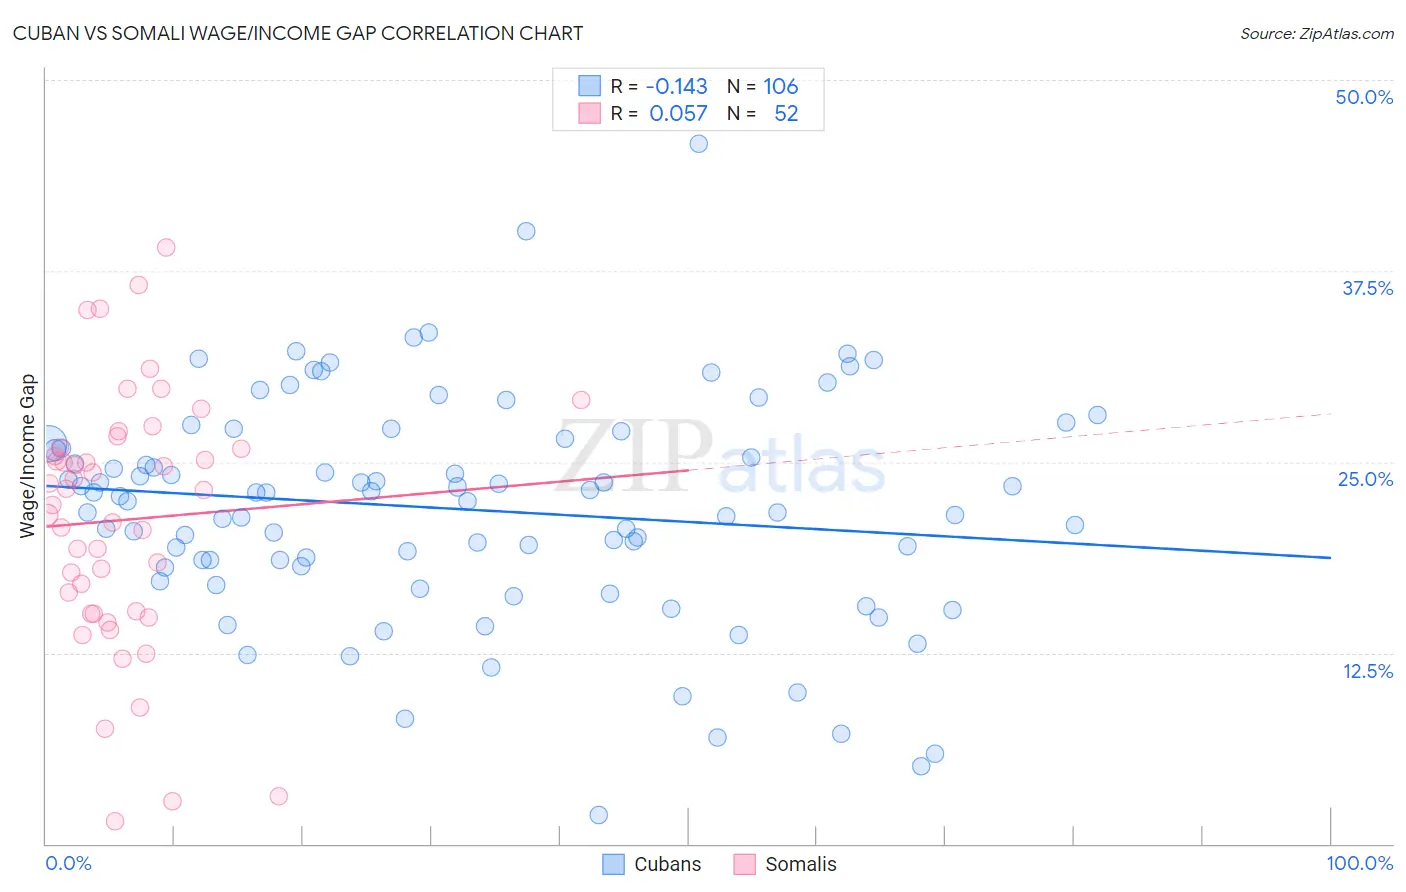 Cuban vs Somali Wage/Income Gap